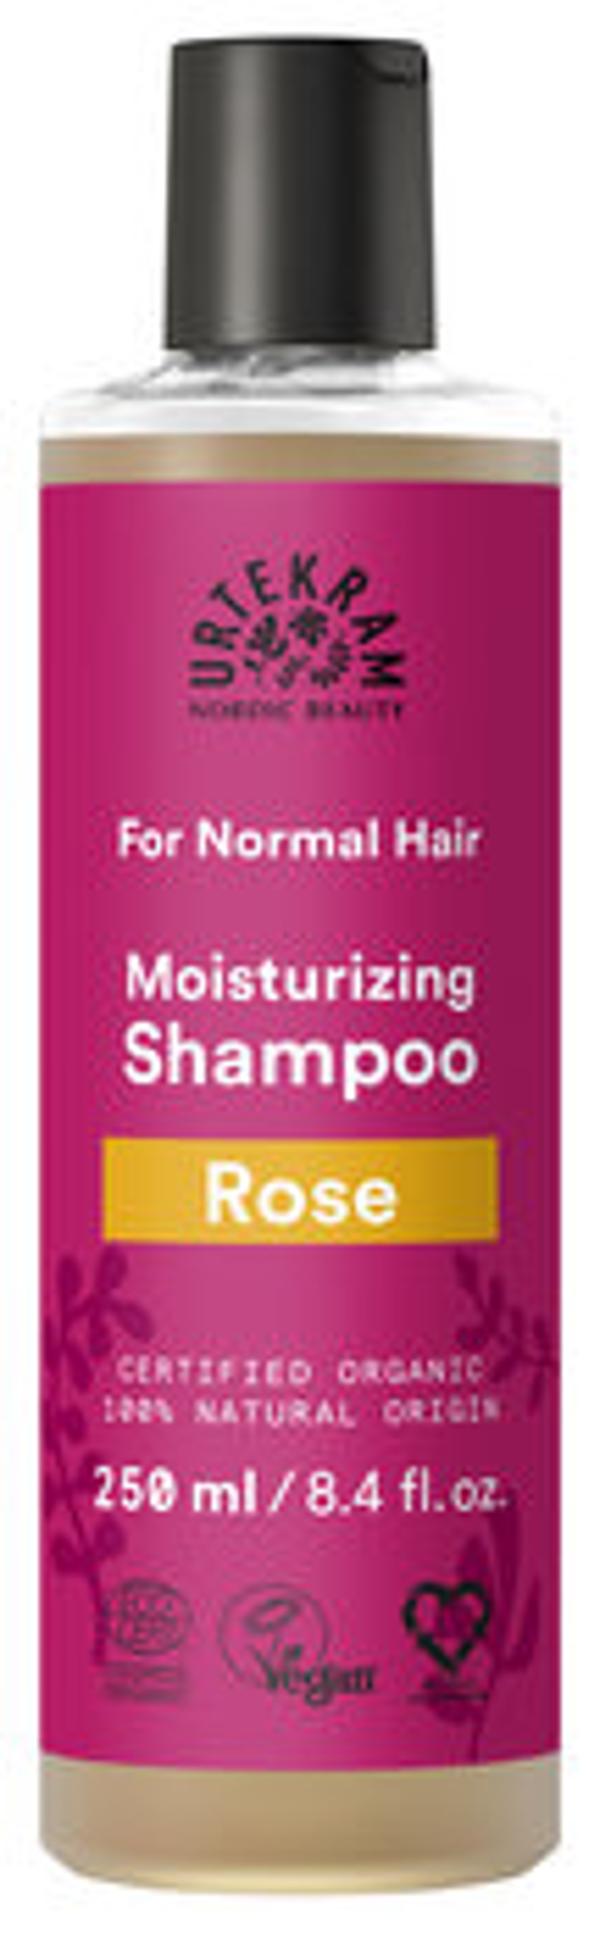 Produktfoto zu Shampoo Rose normales Haar 250ml